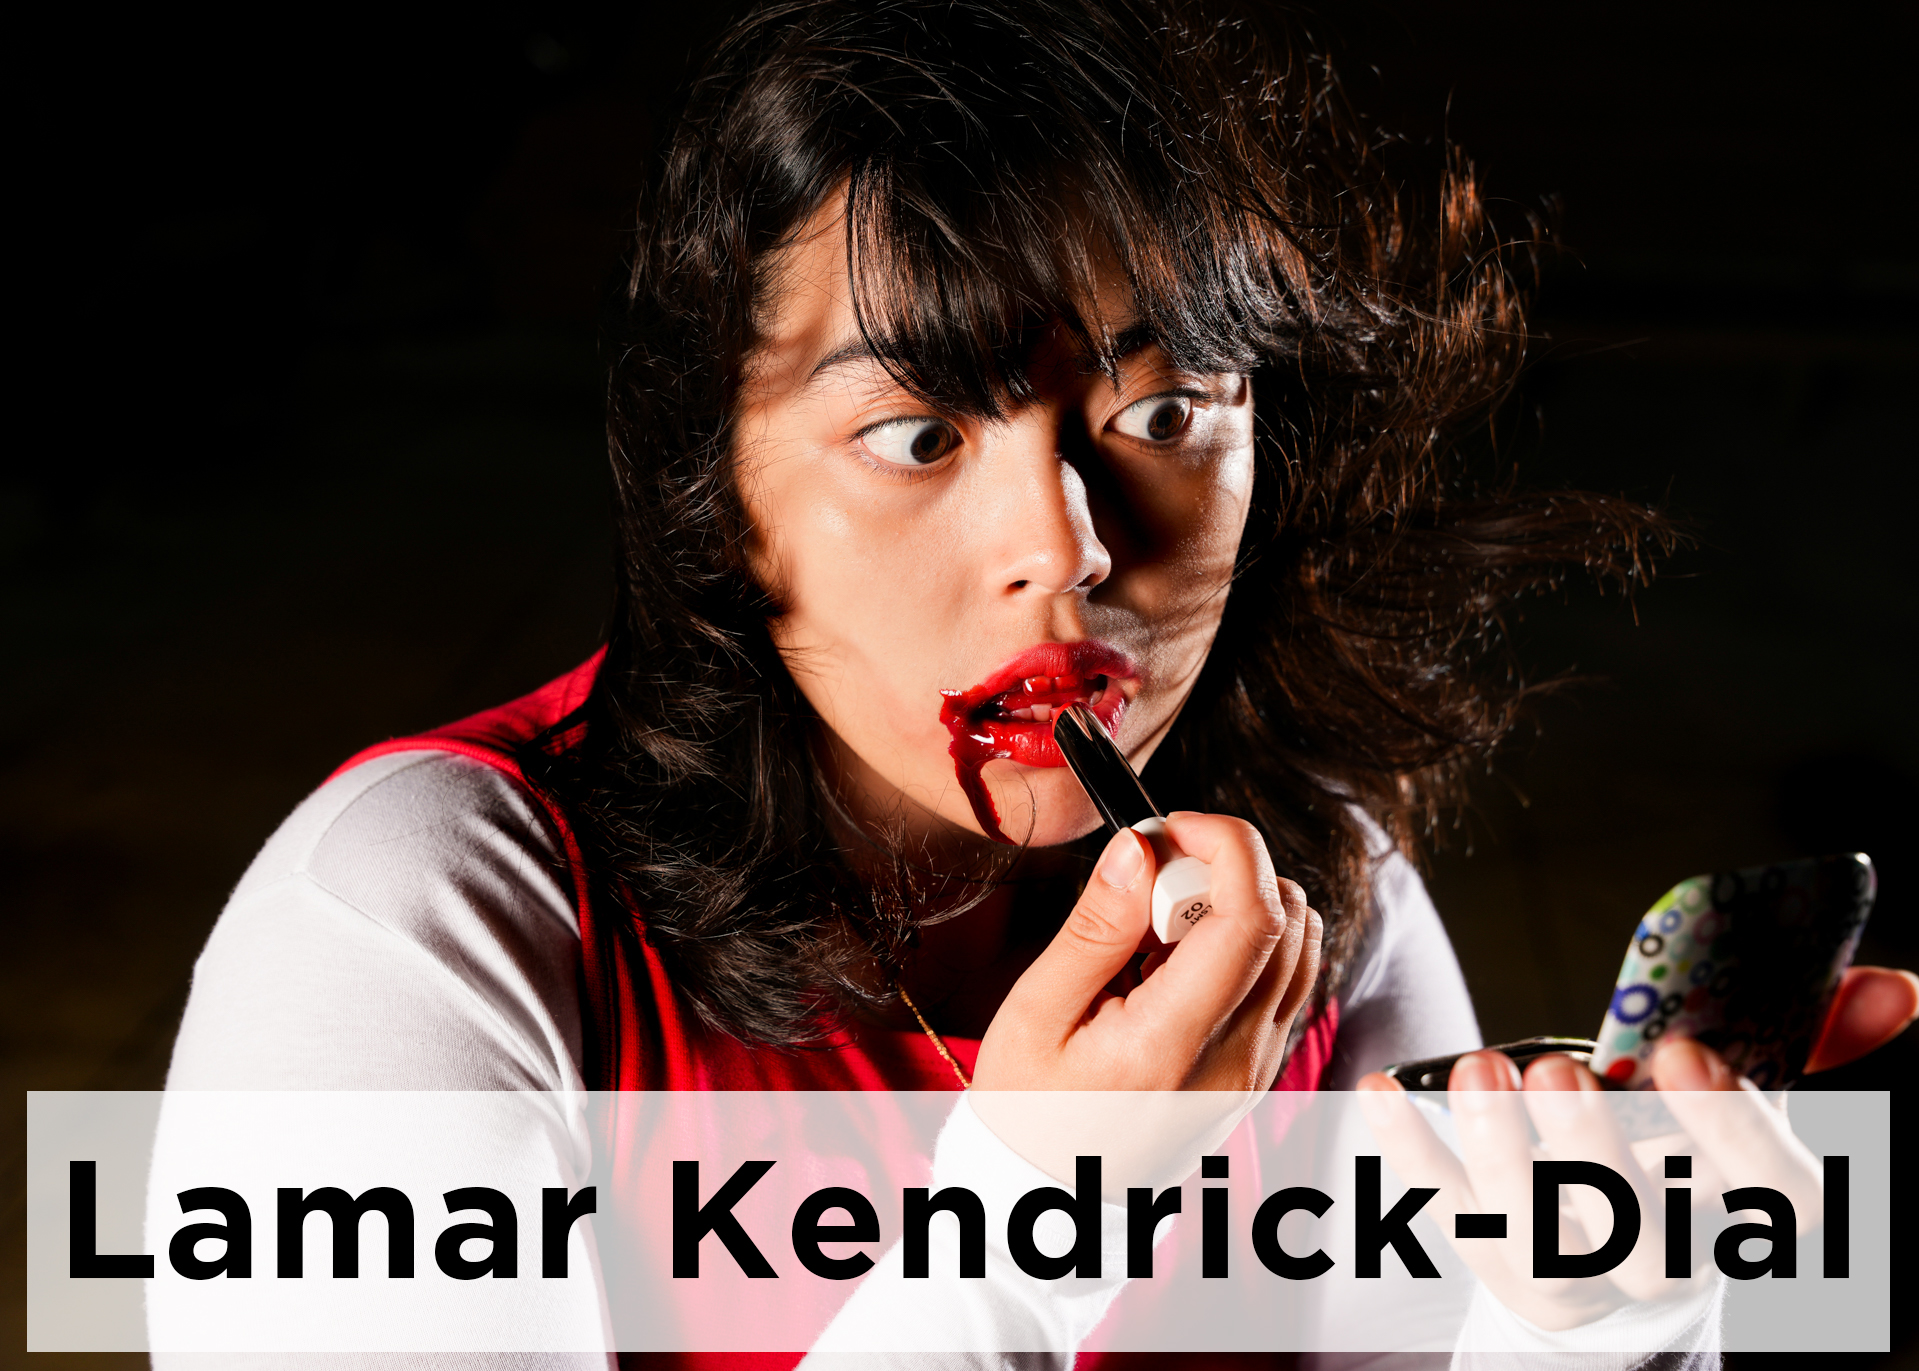 Lamar Kendrick-Dial